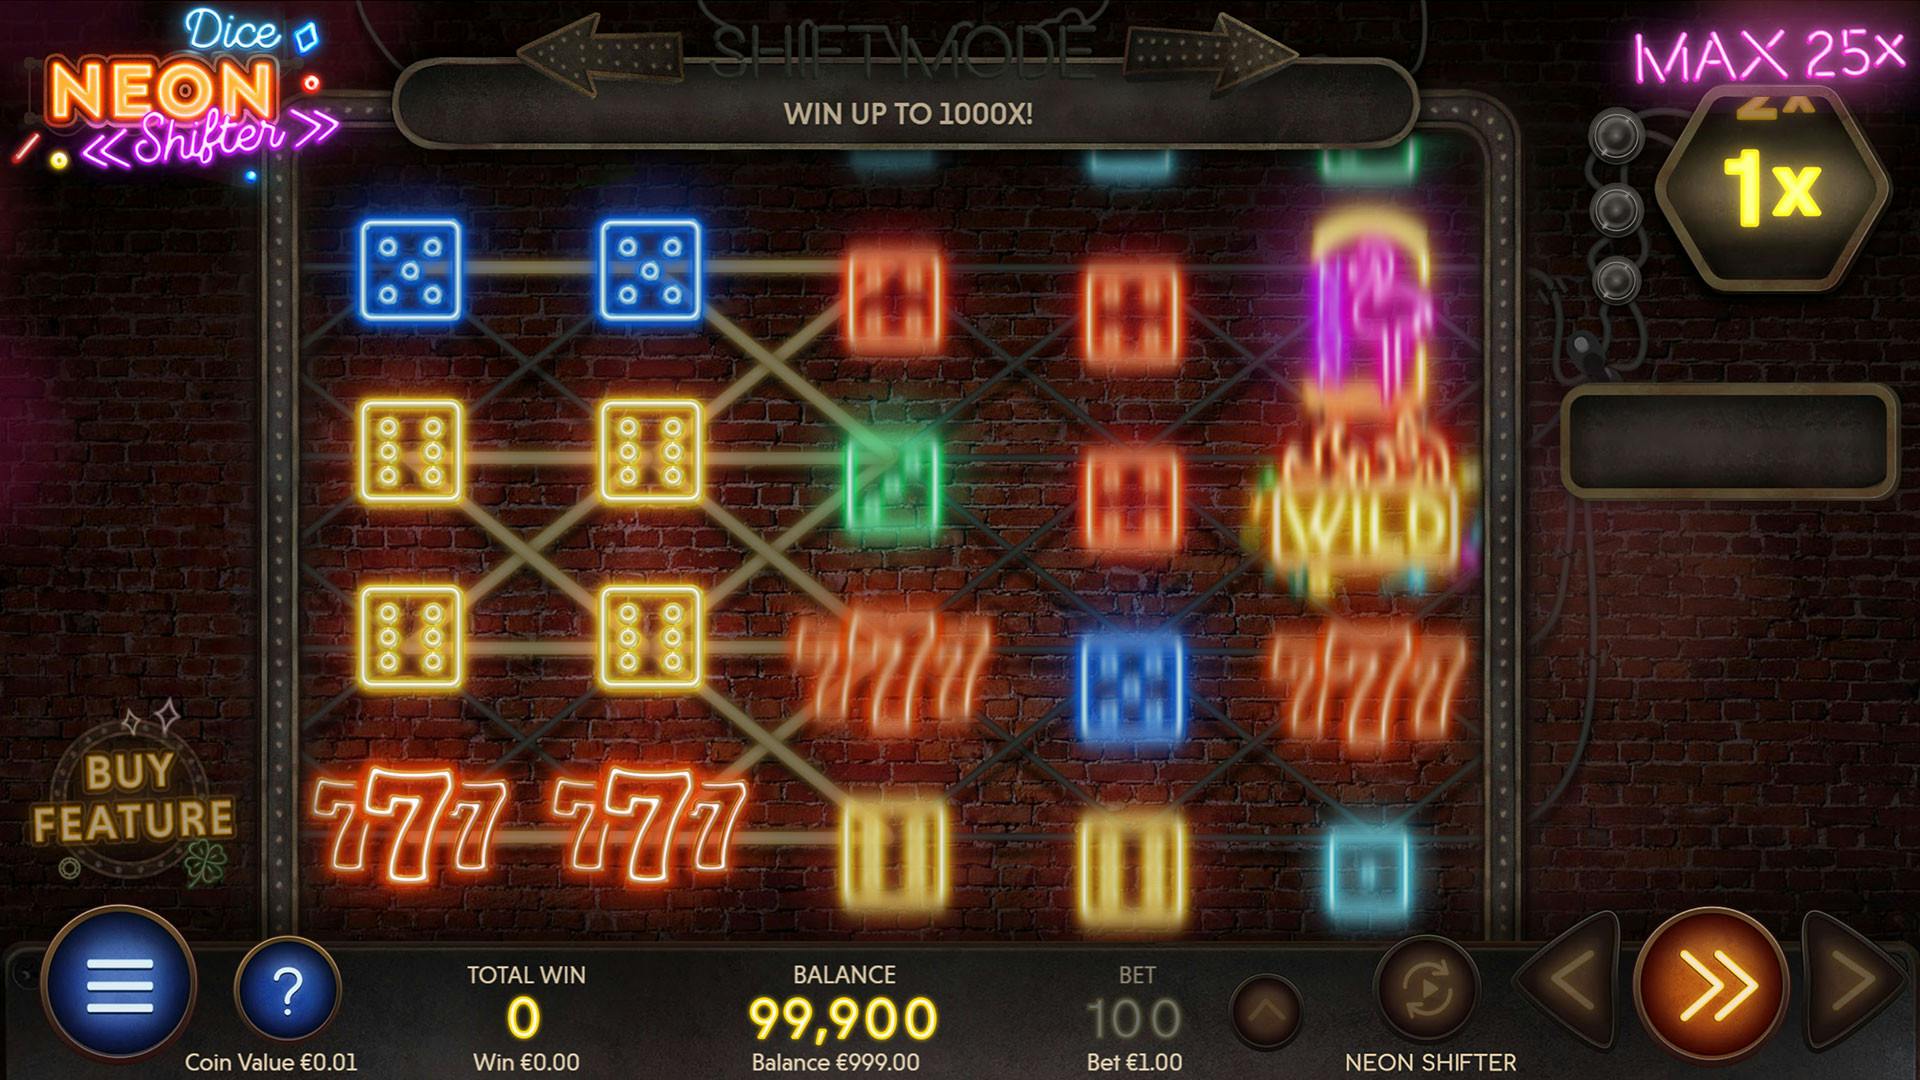 Airdice Neon Shifter jeu dice slot, multiplicateurs en folie.